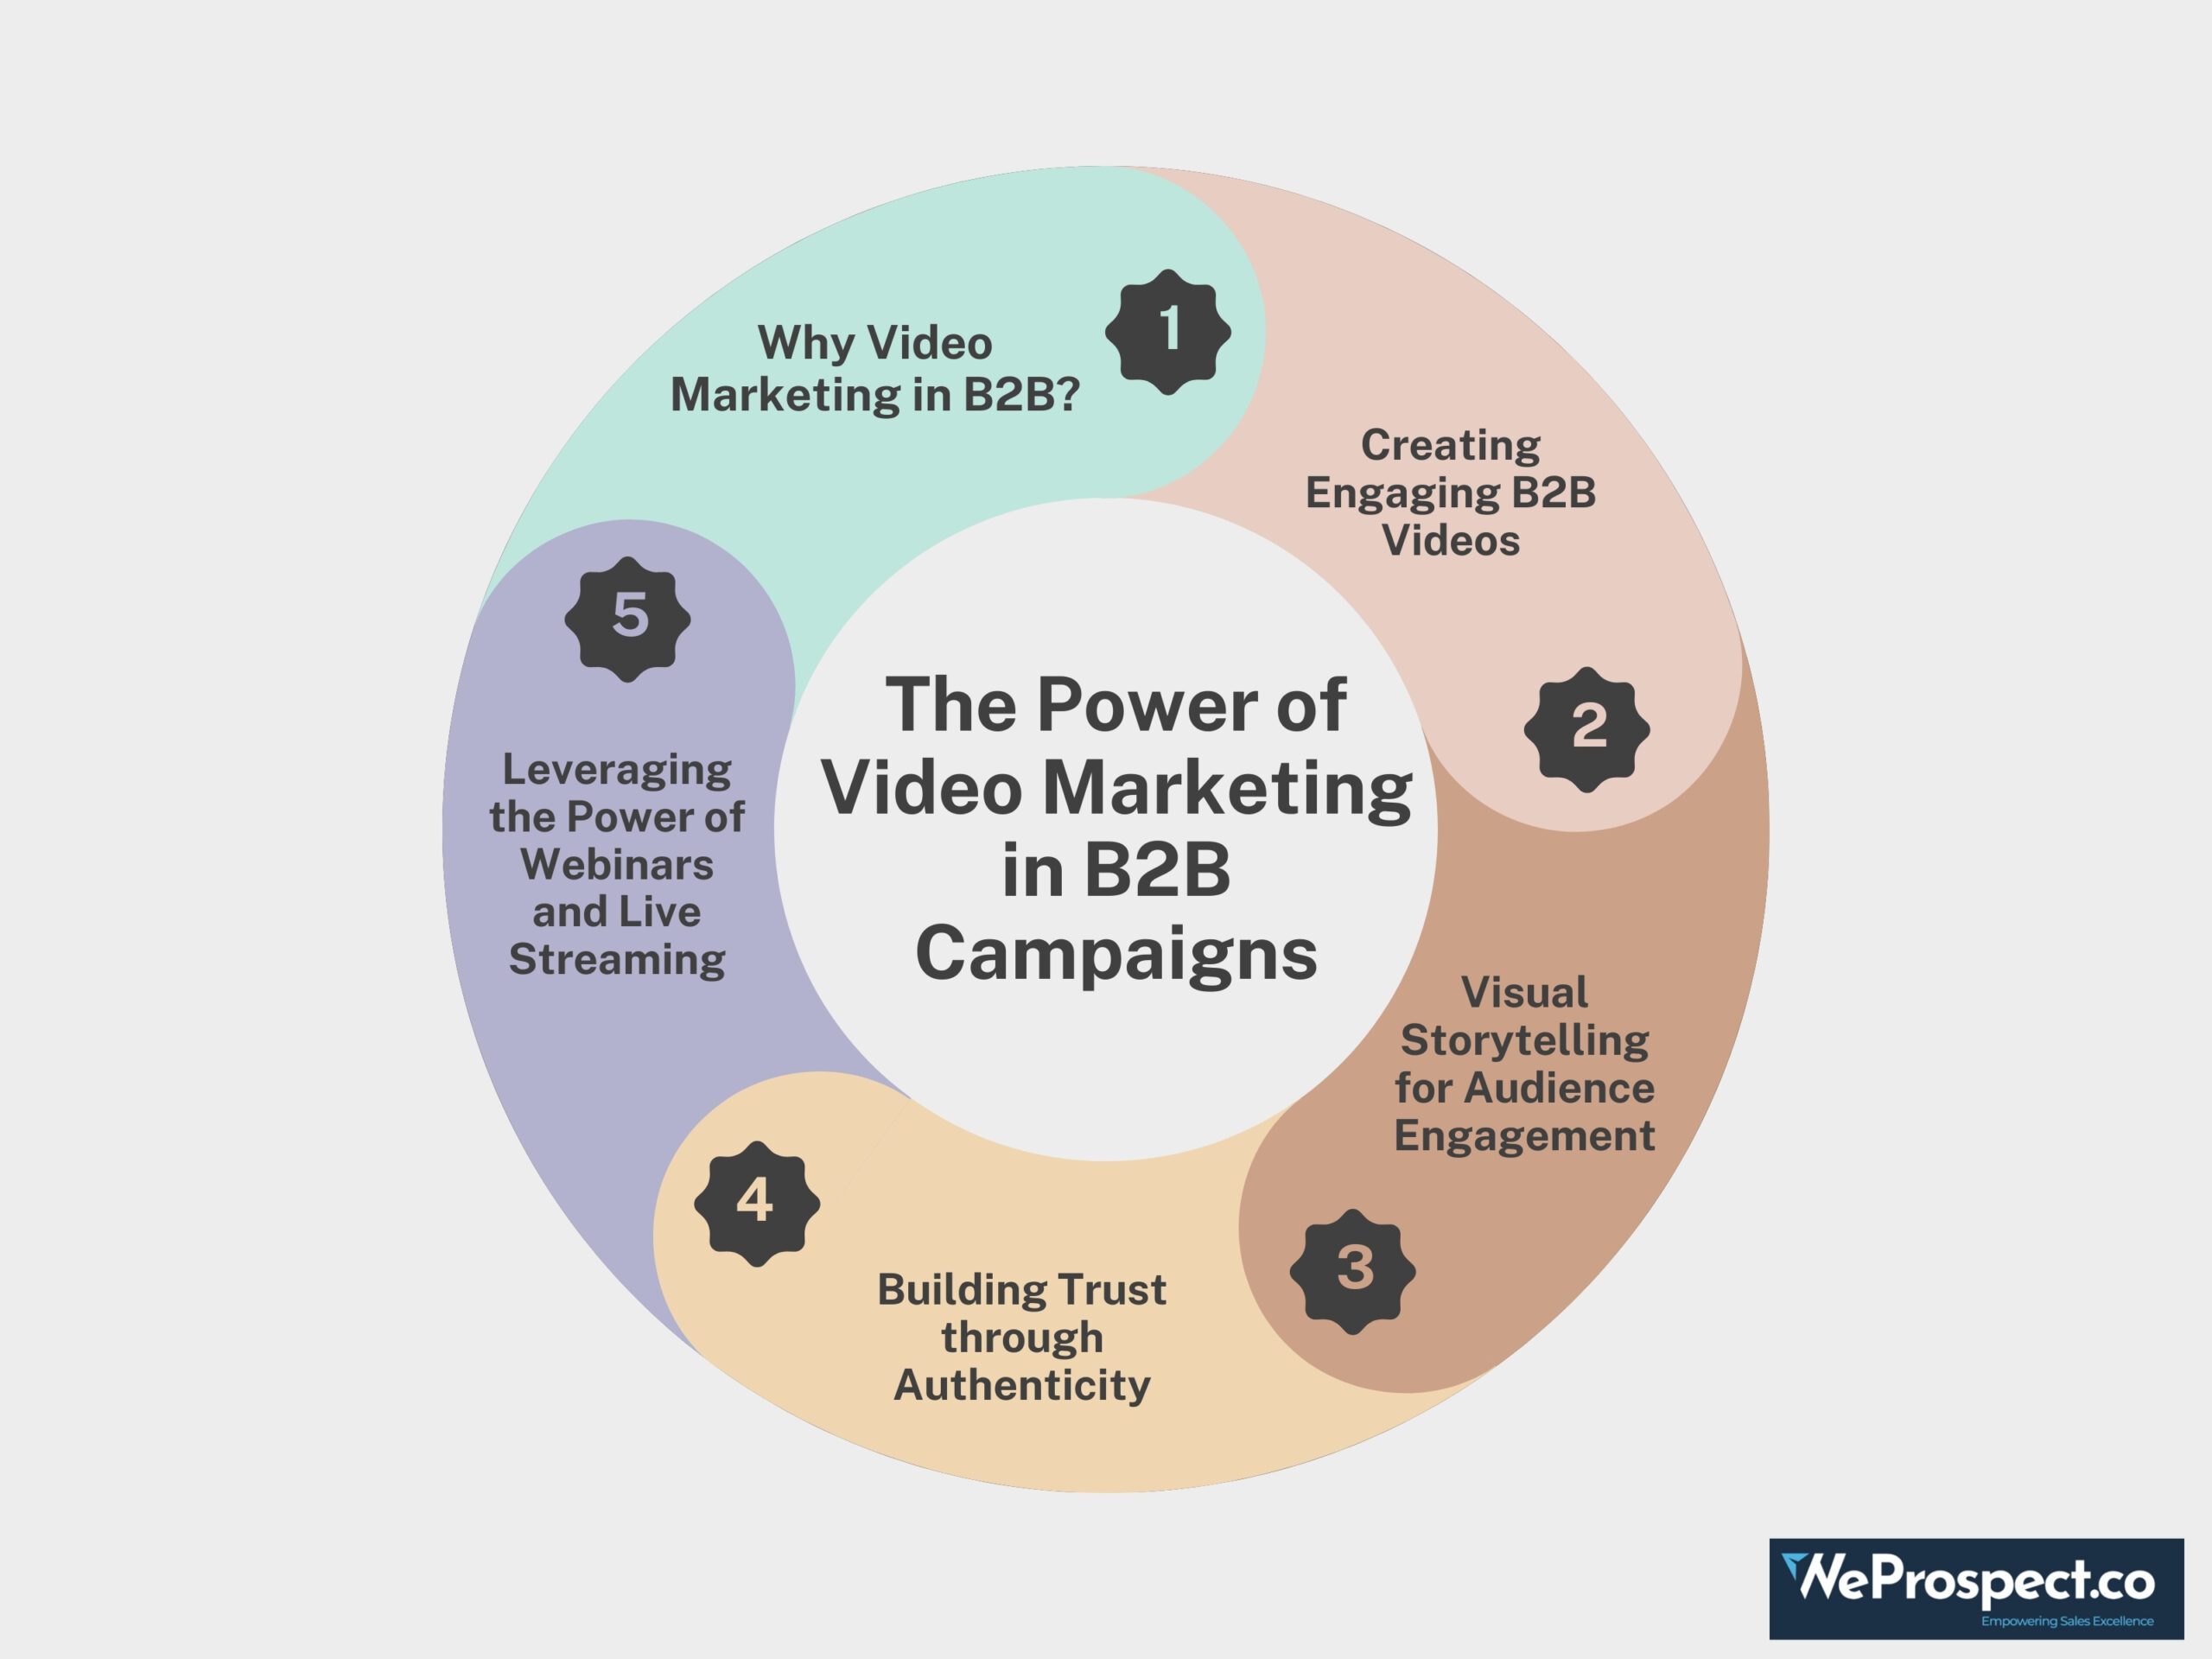 Video Marketing in B2B Campaigns